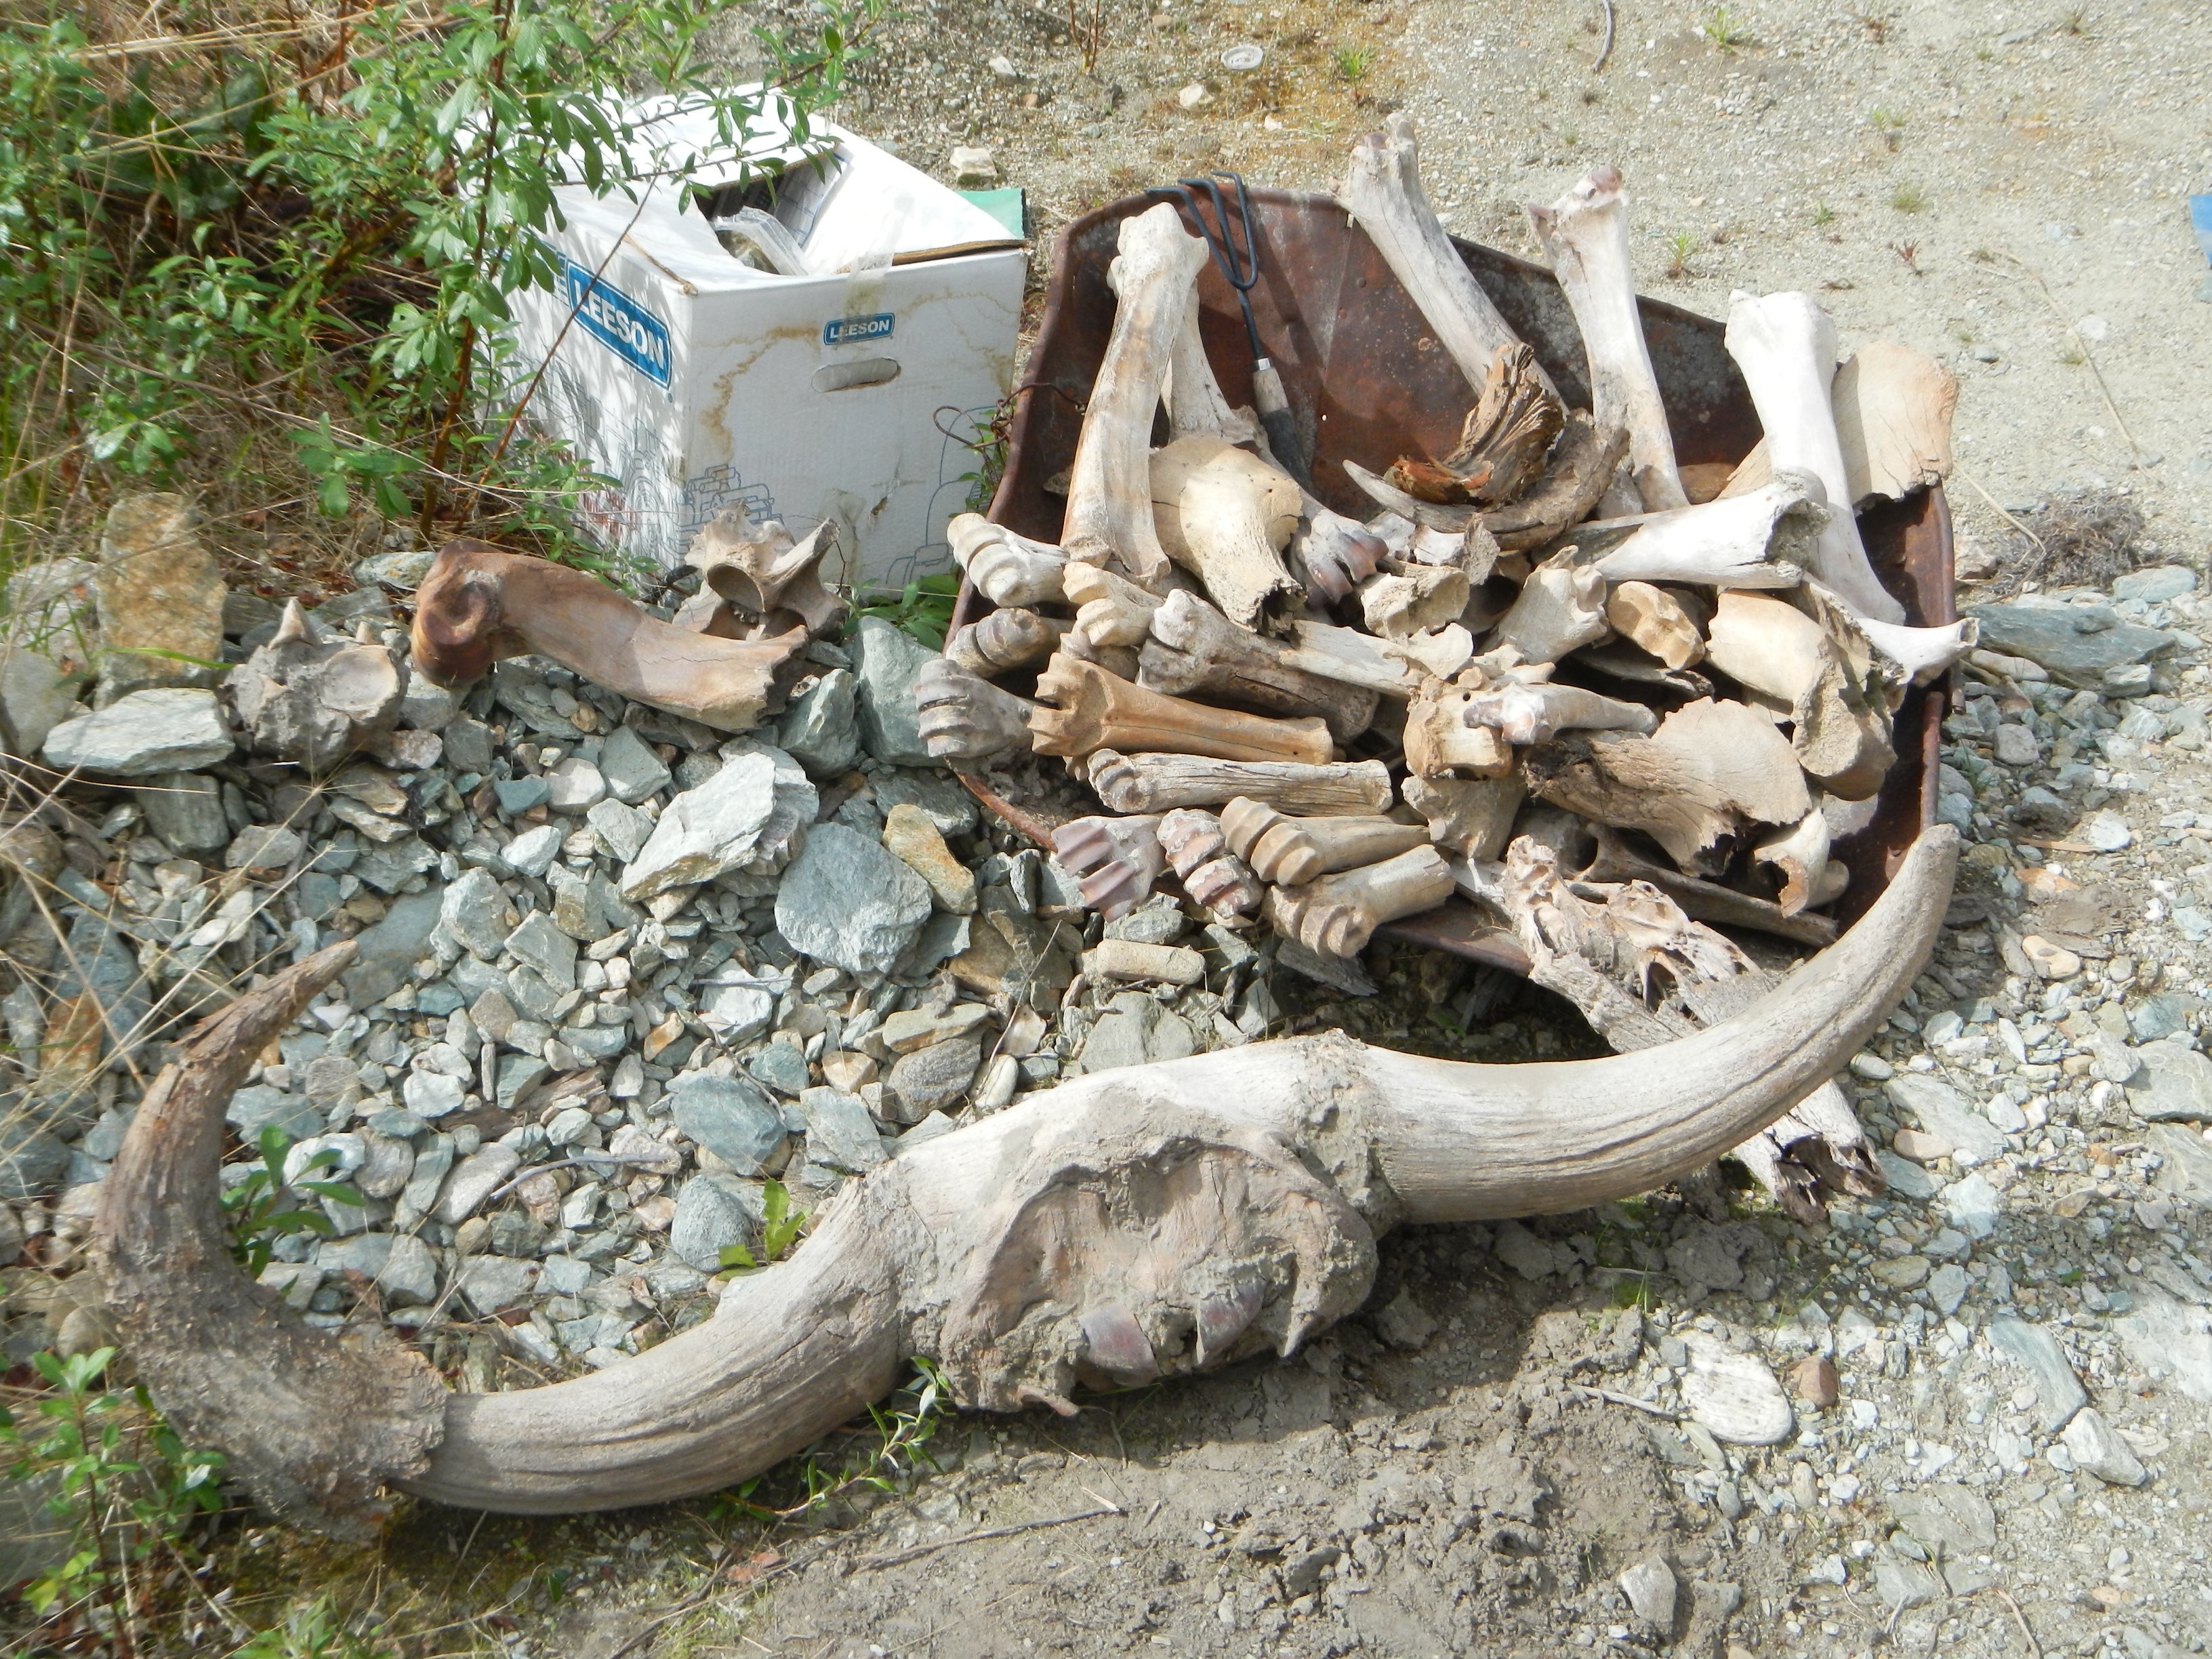 Pleistocene fossils from the Klondike region of Yukon, including Bison priscus skull.